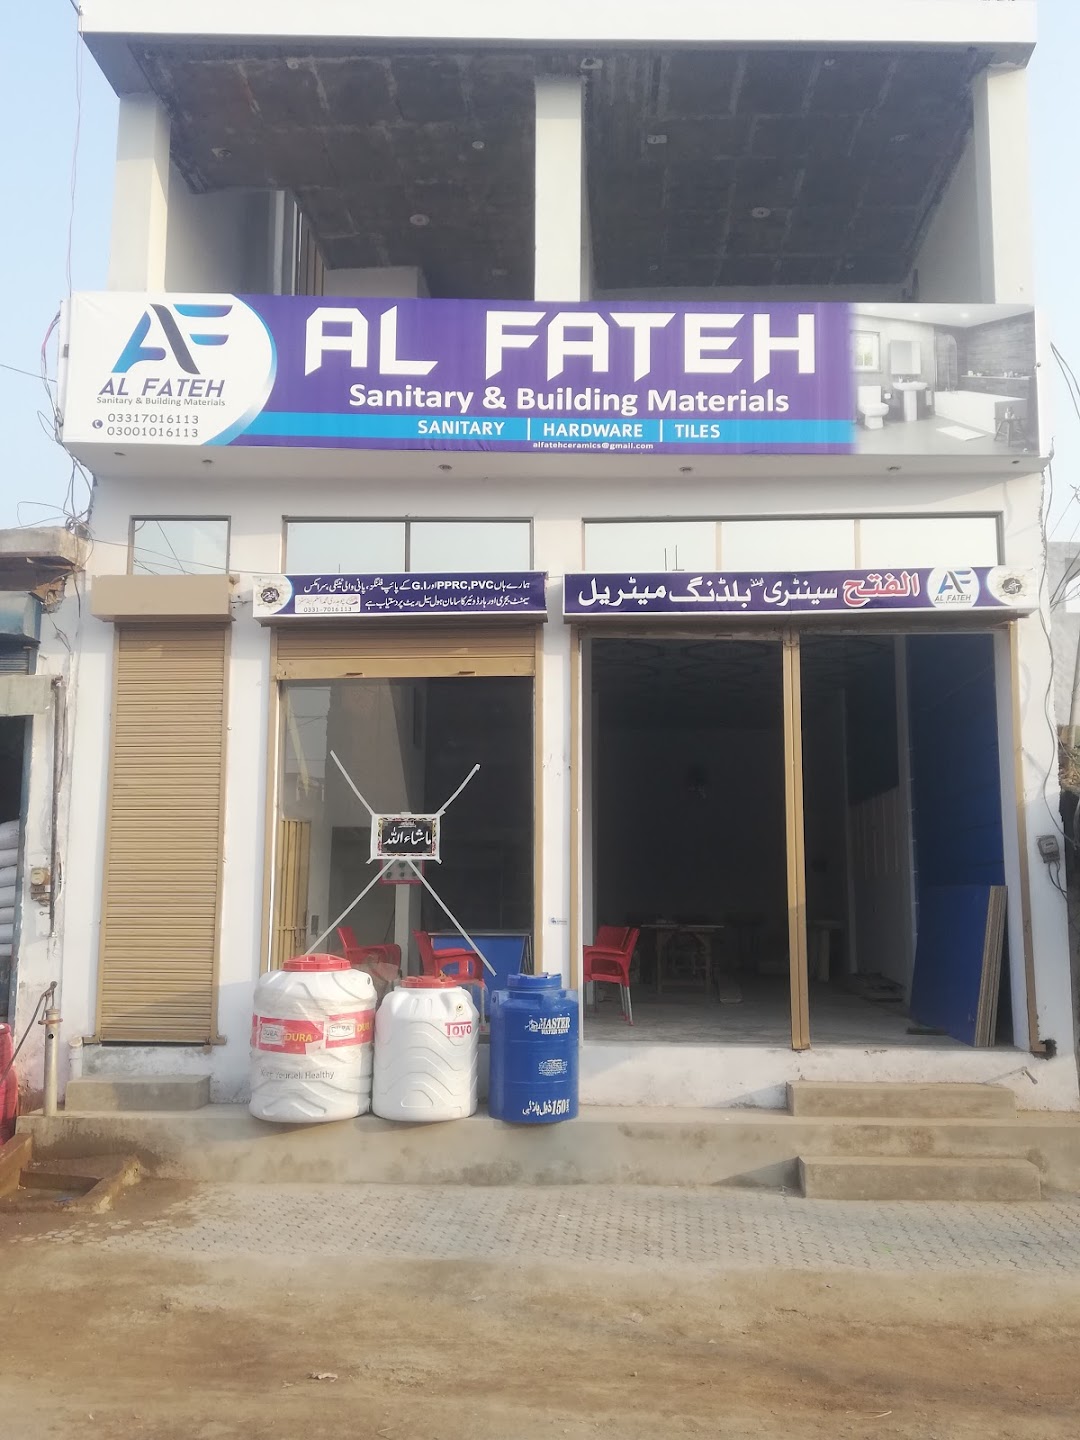 Al-Fateh Sanitary, Tiles & Hardware Store ABK